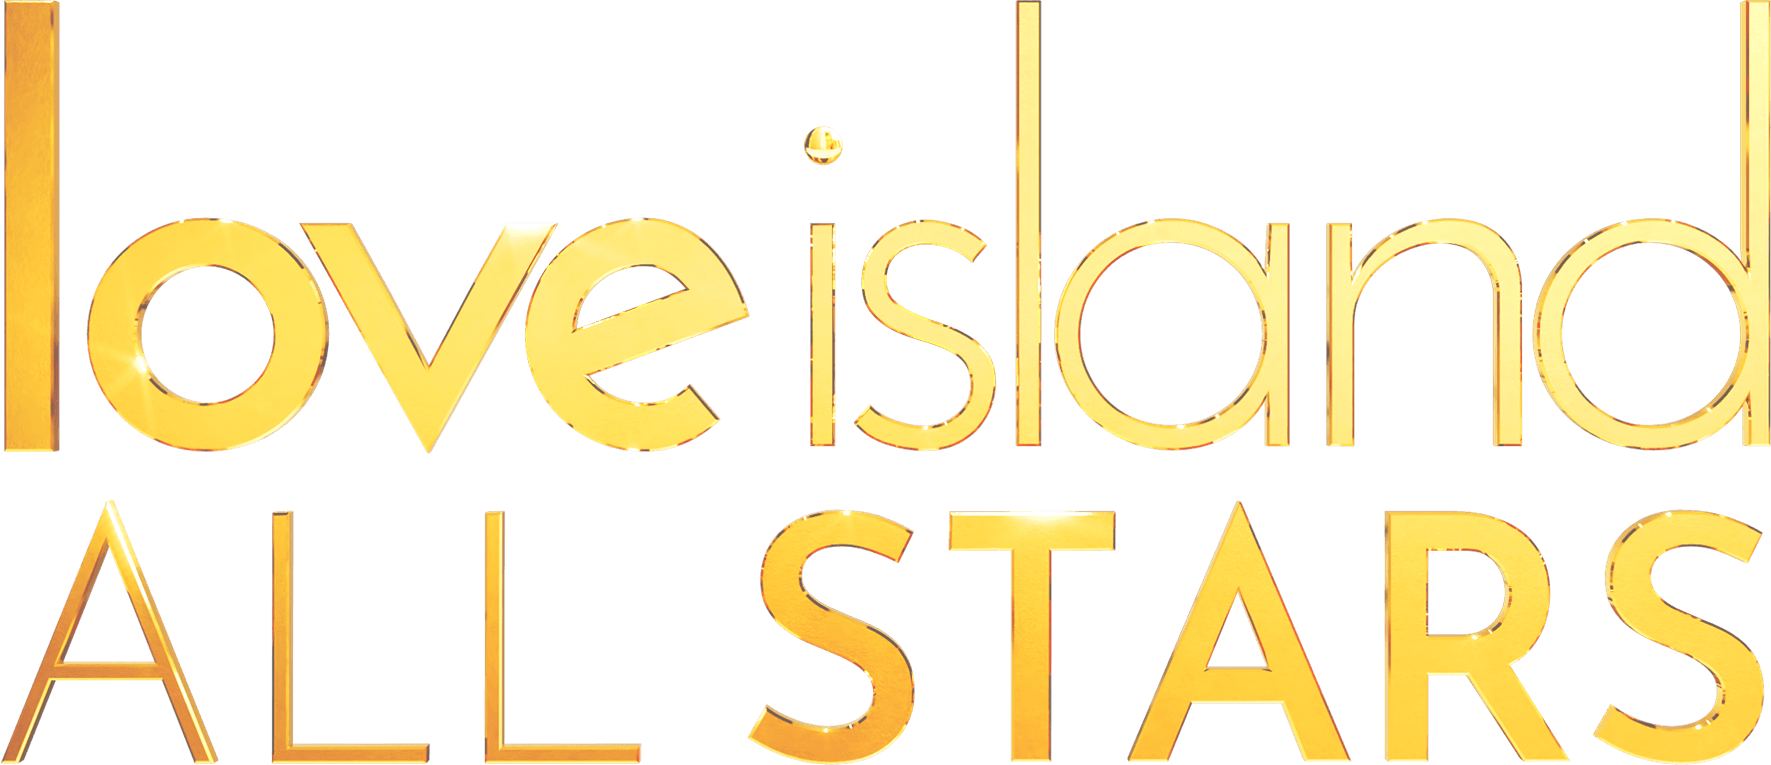 Love Island: All Stars logo